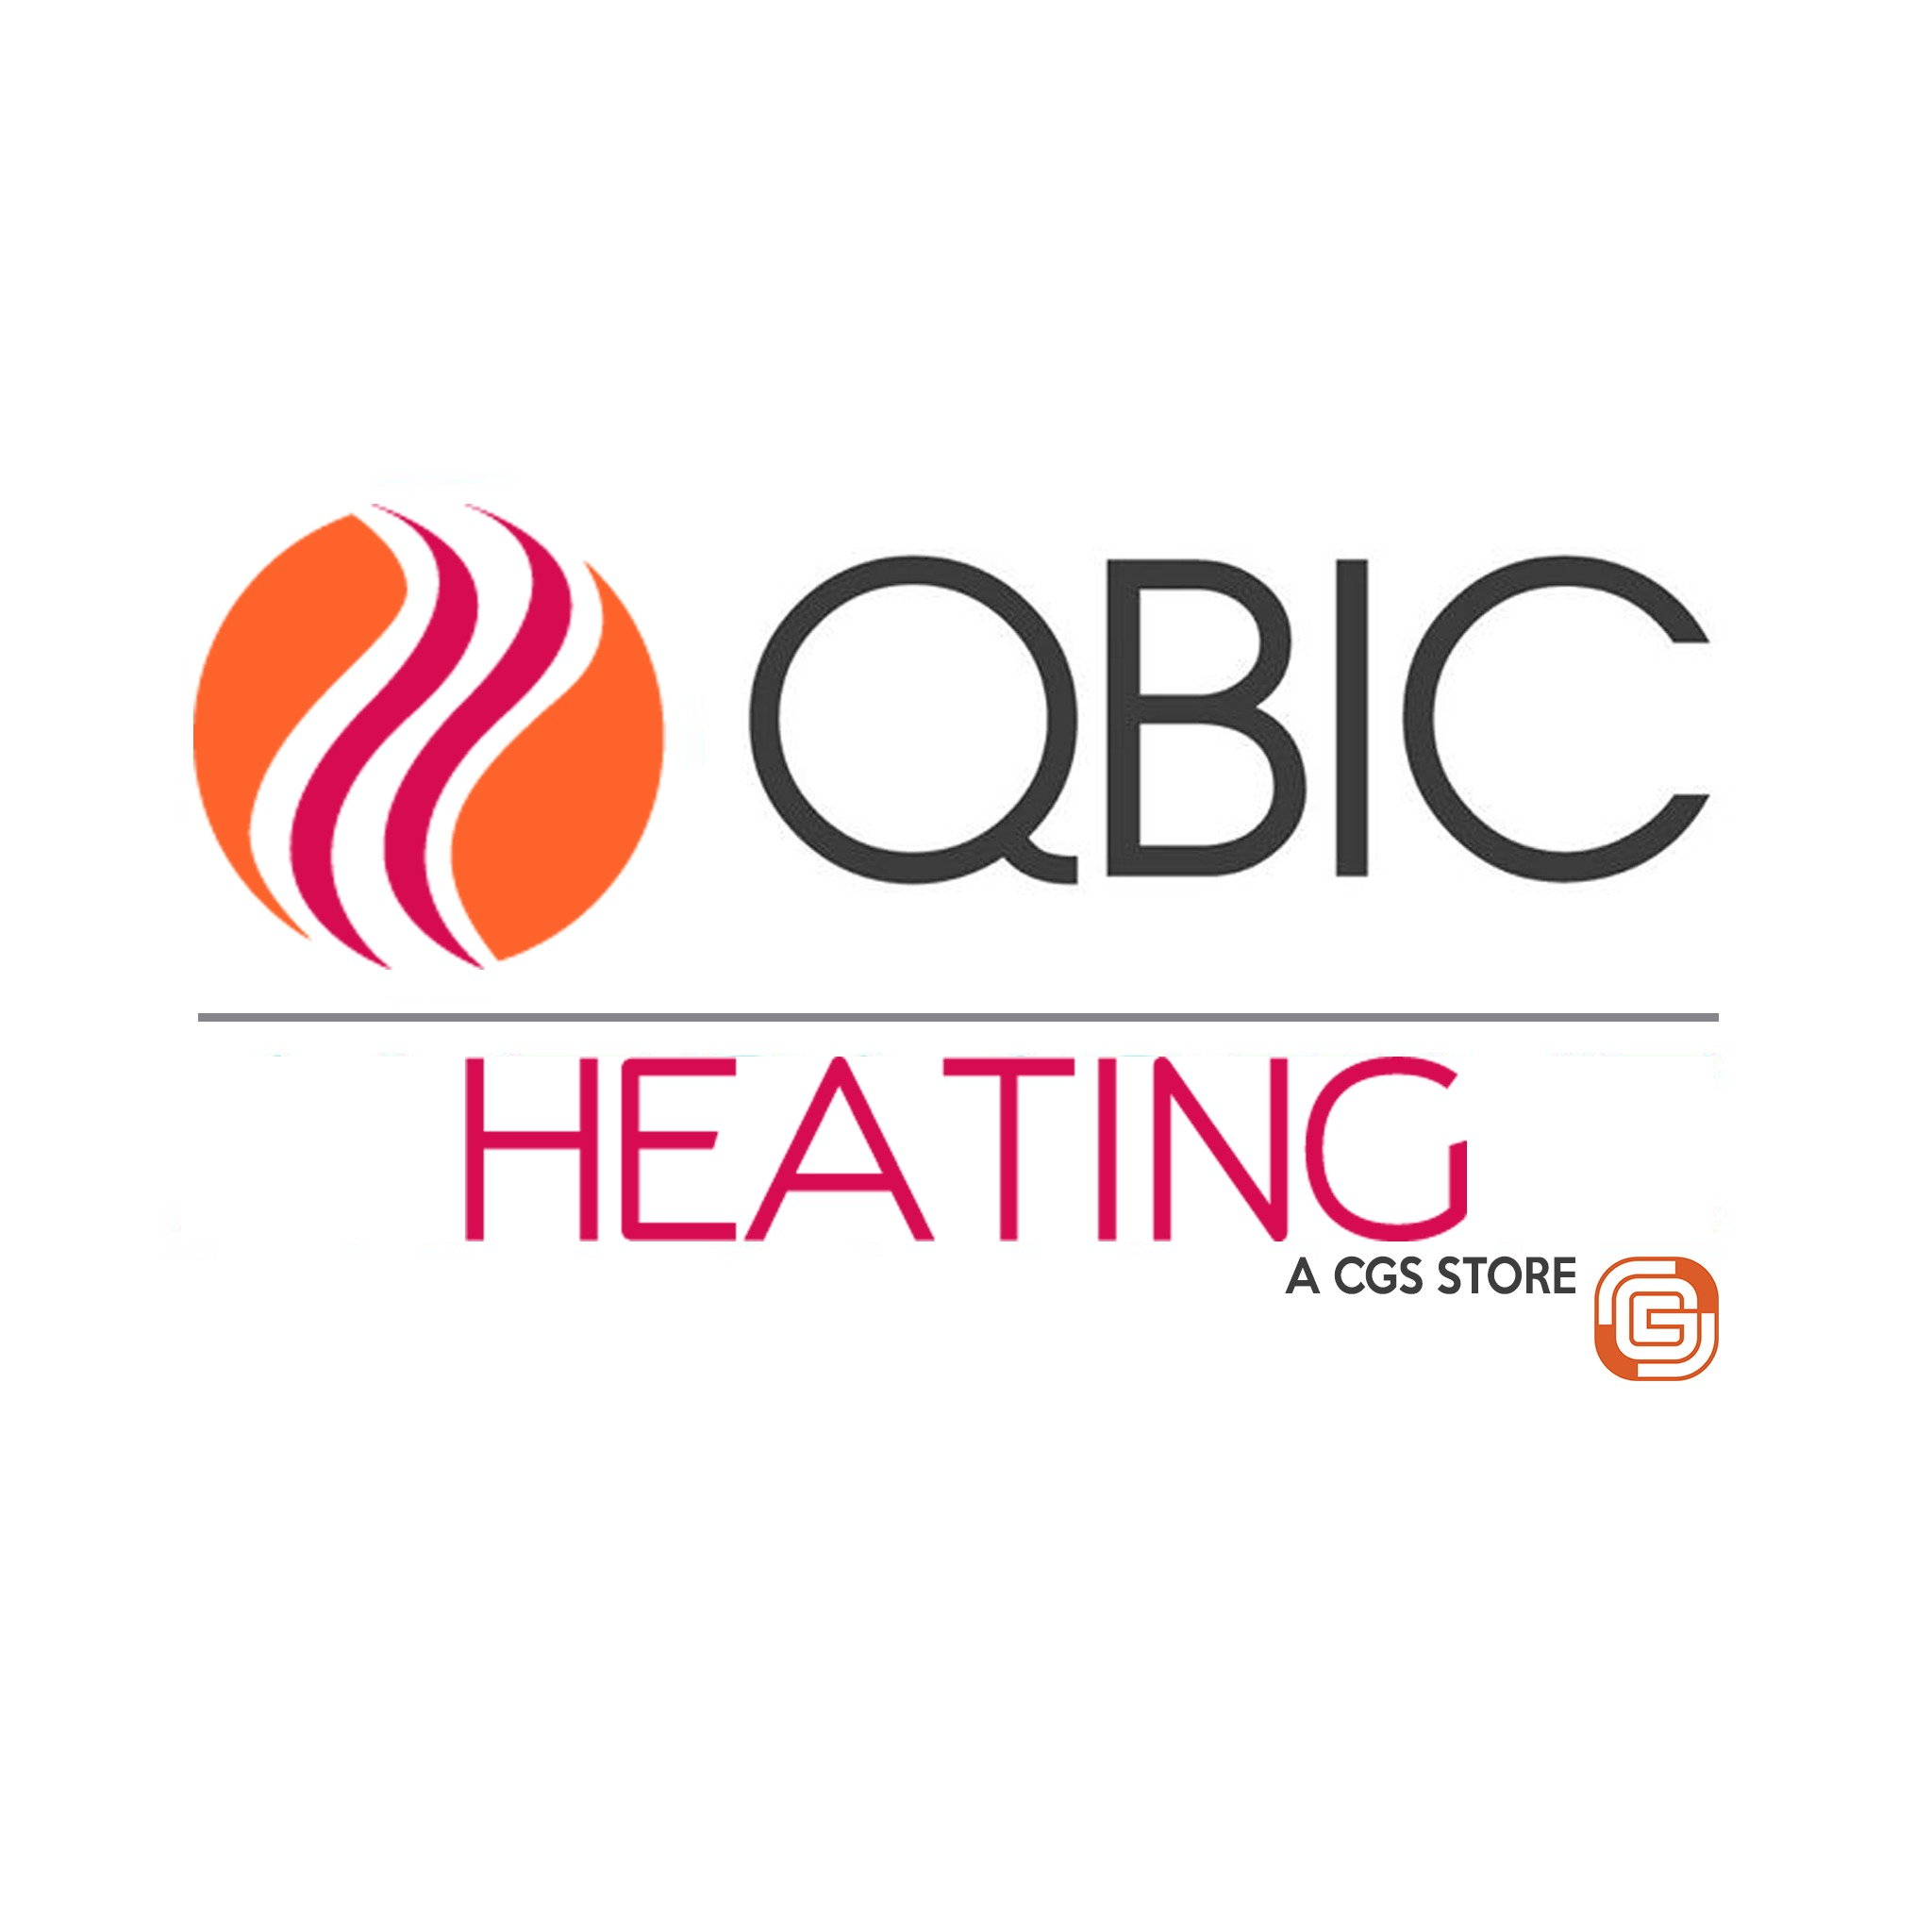 QBIC Heating Logo